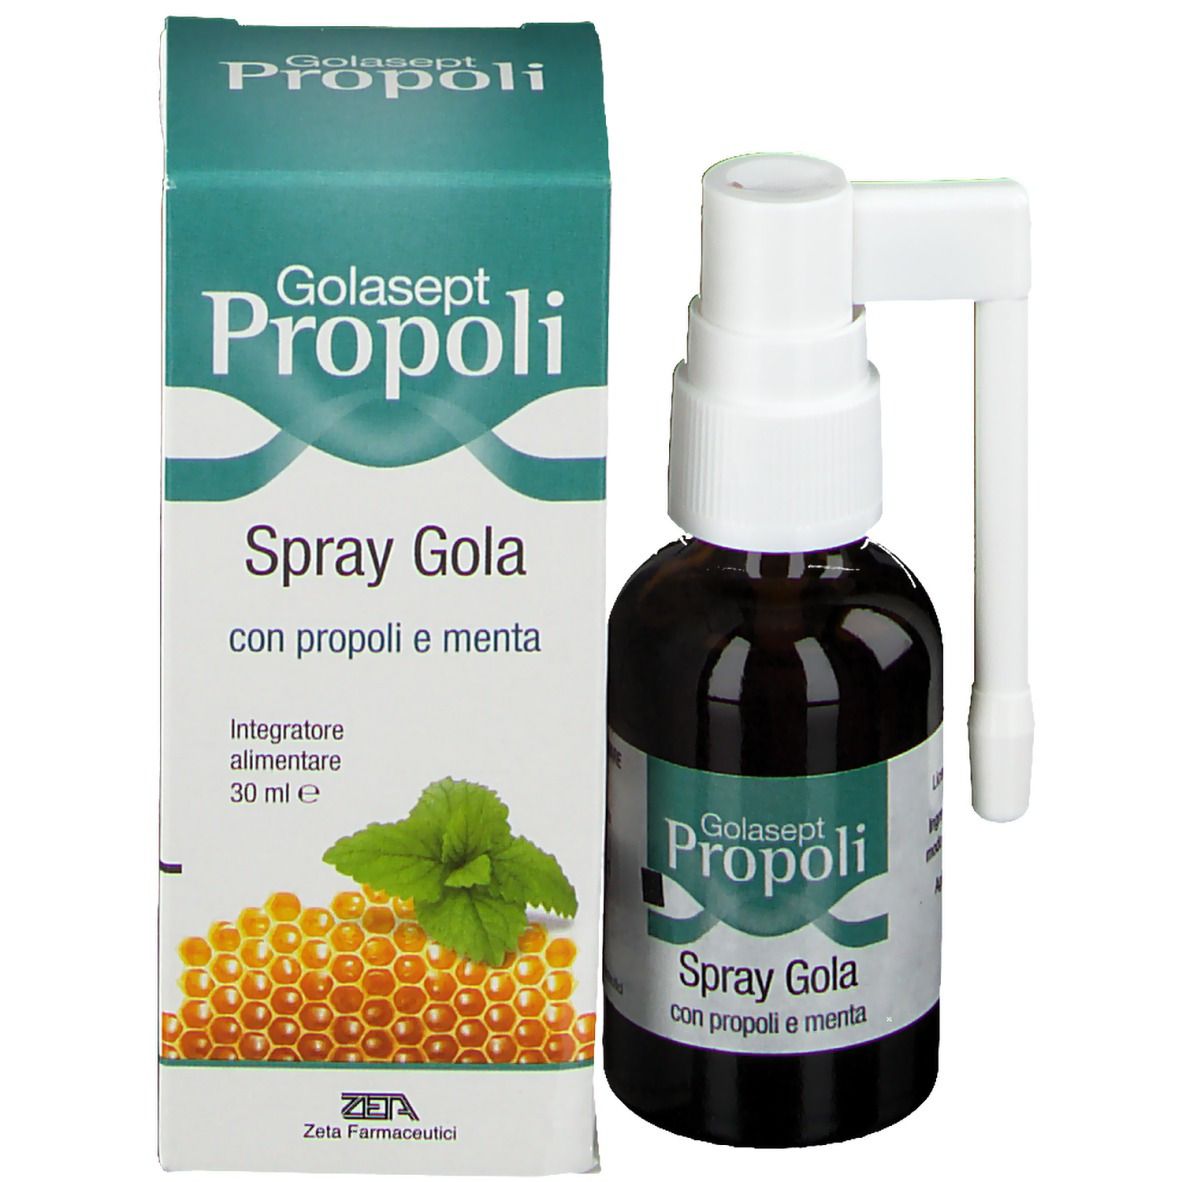 Golasept Propoli Spray Gola Con Porpoli e Menta